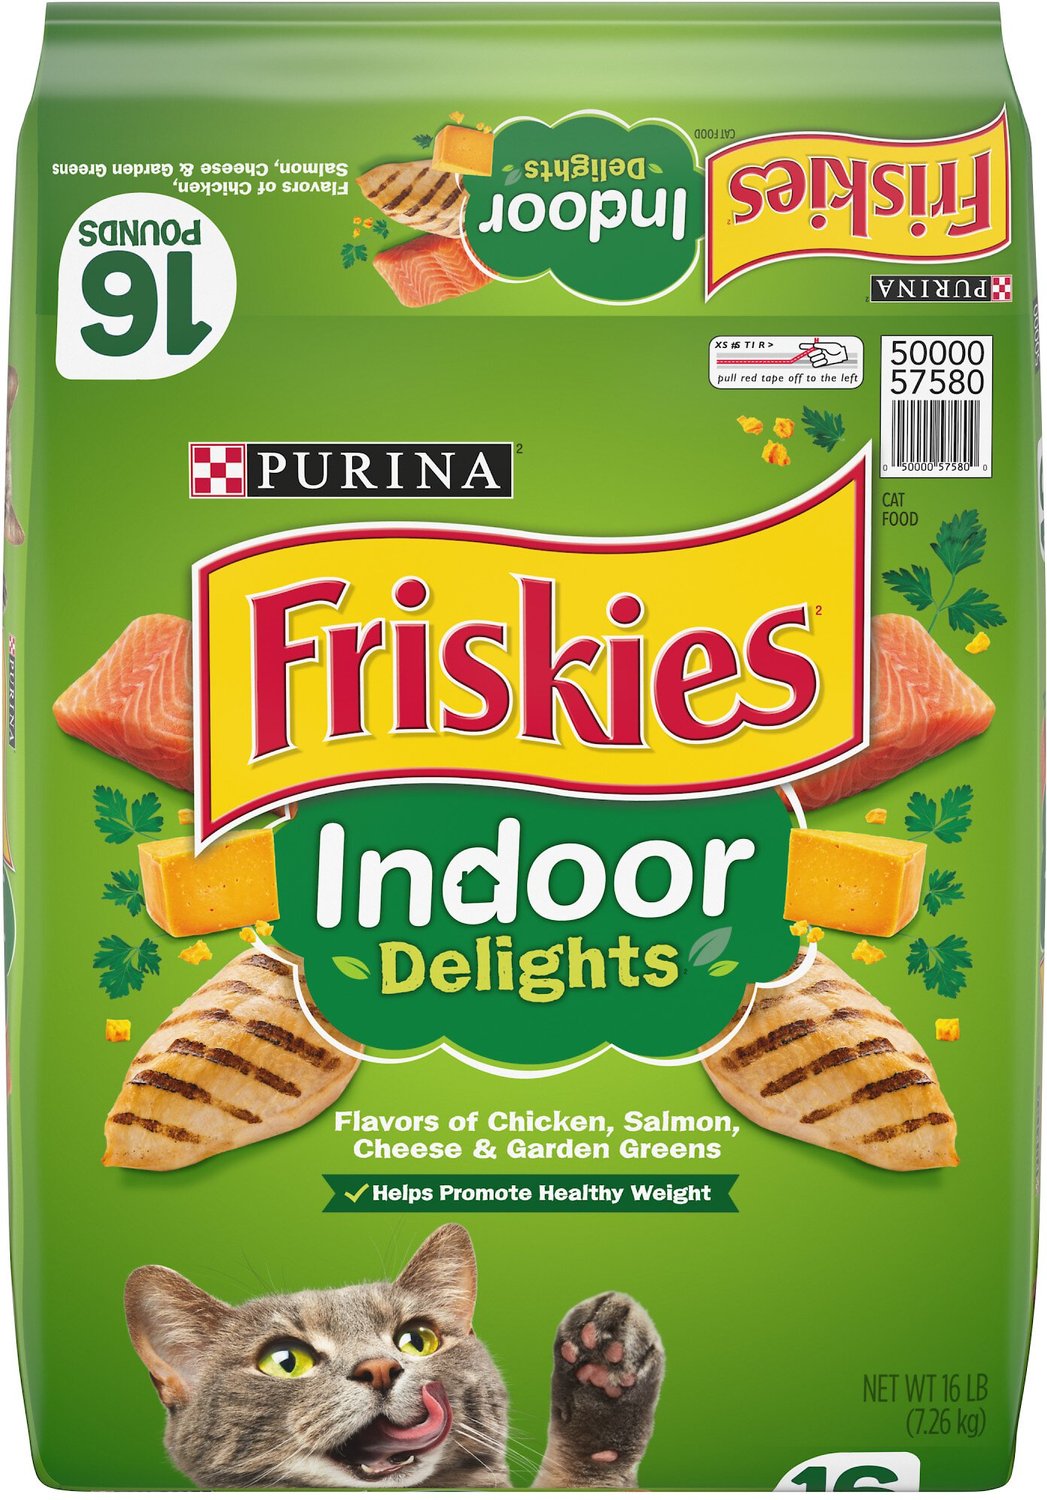 Friskies Indoor Delights Dry Cat Food, 16lb bag